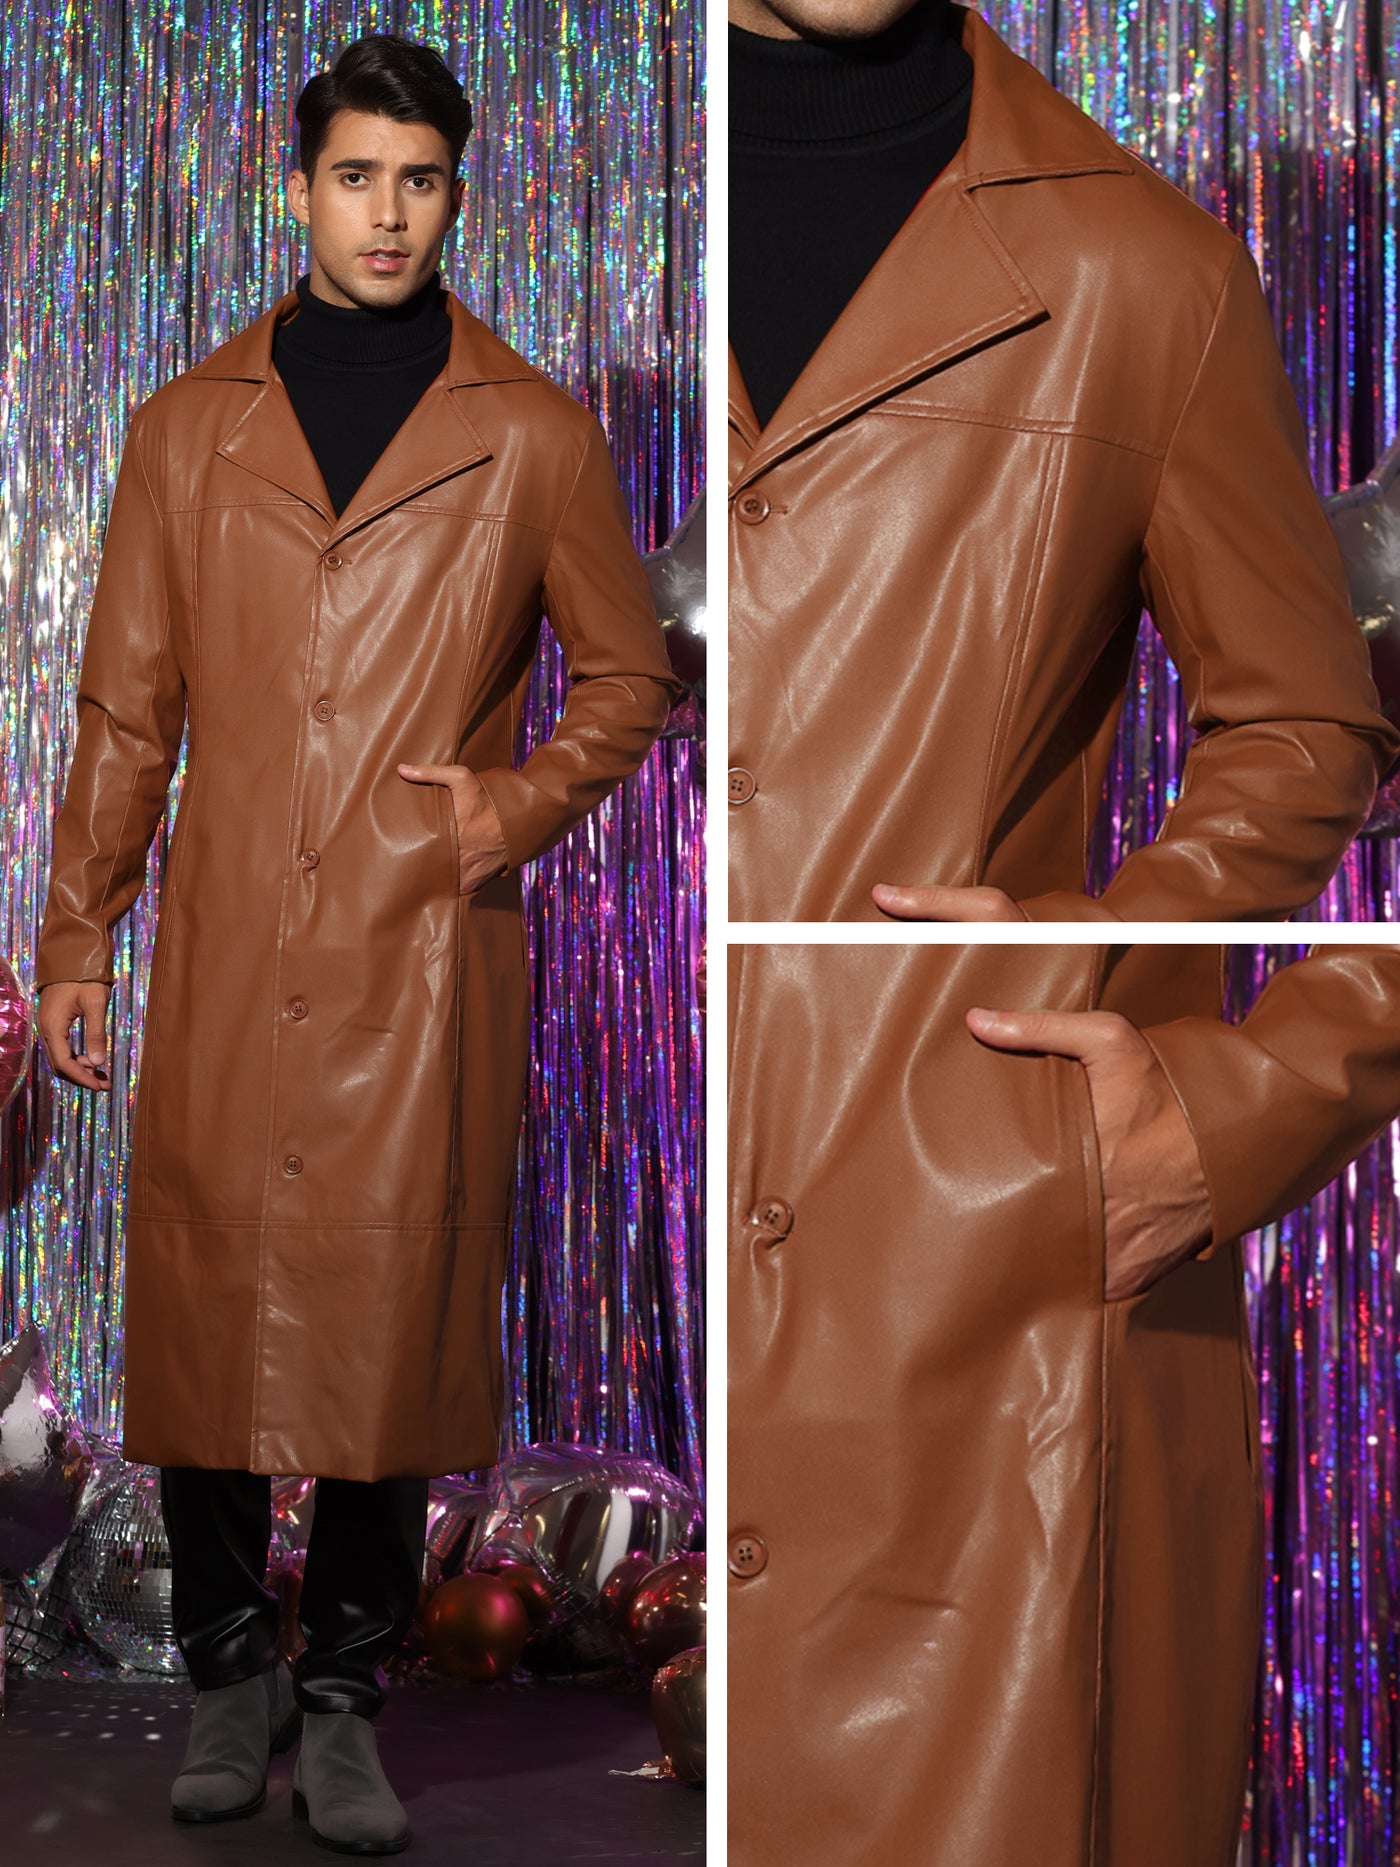 Bublédon PU Faux Leather Long Jacket for Men's Vintage Lapel Gothic Trench Coat Outwear